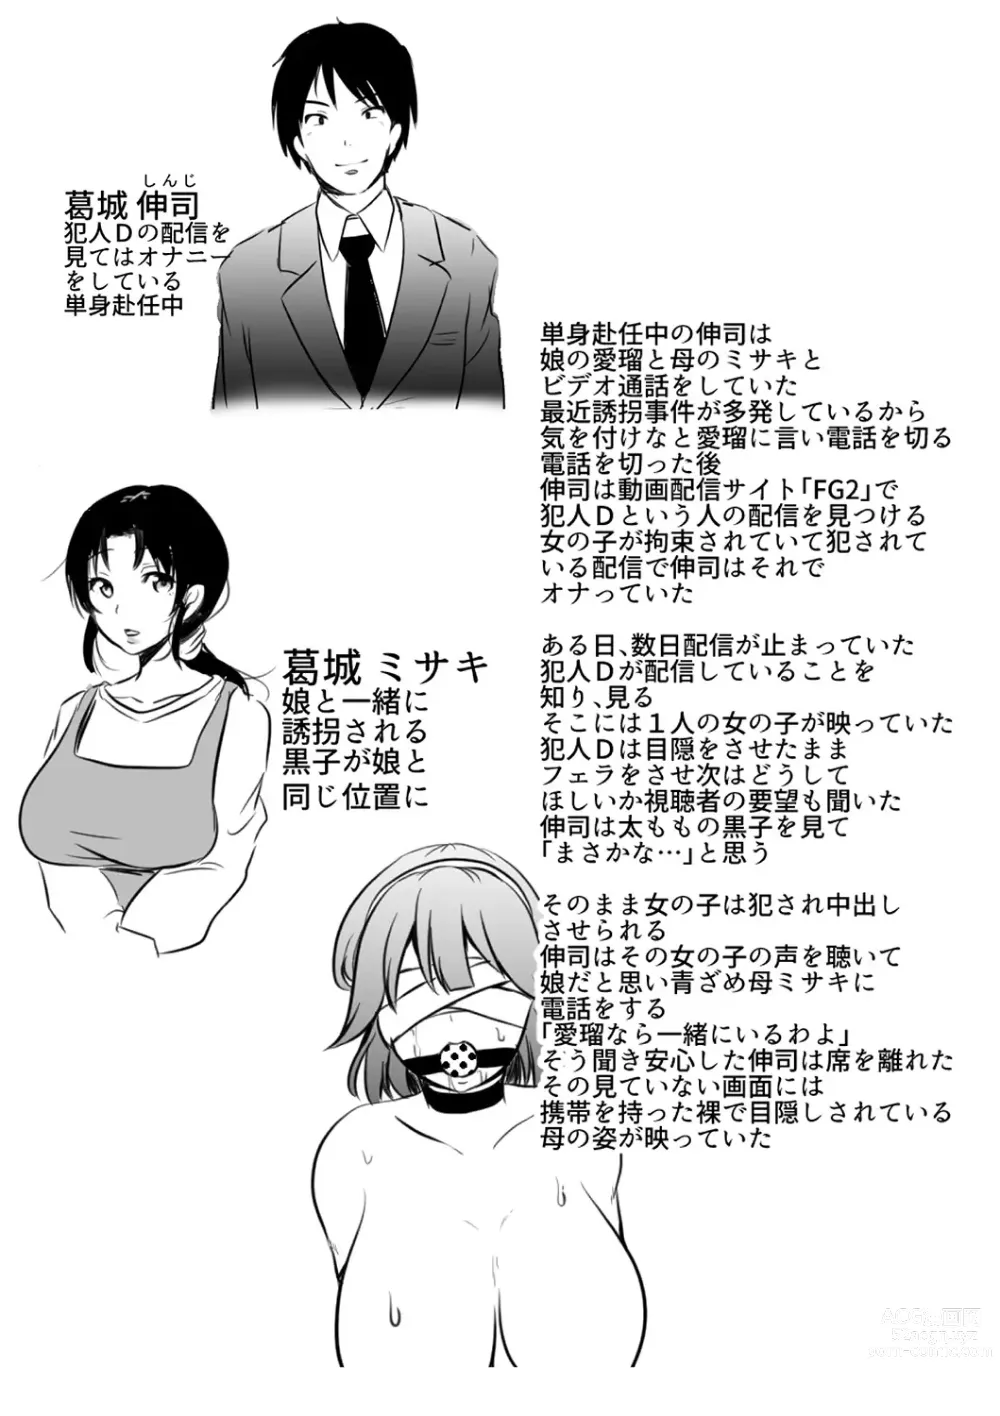 Page 203 of manga Kowashite Asobo + DLsite Gentei Chara Settei & Plot